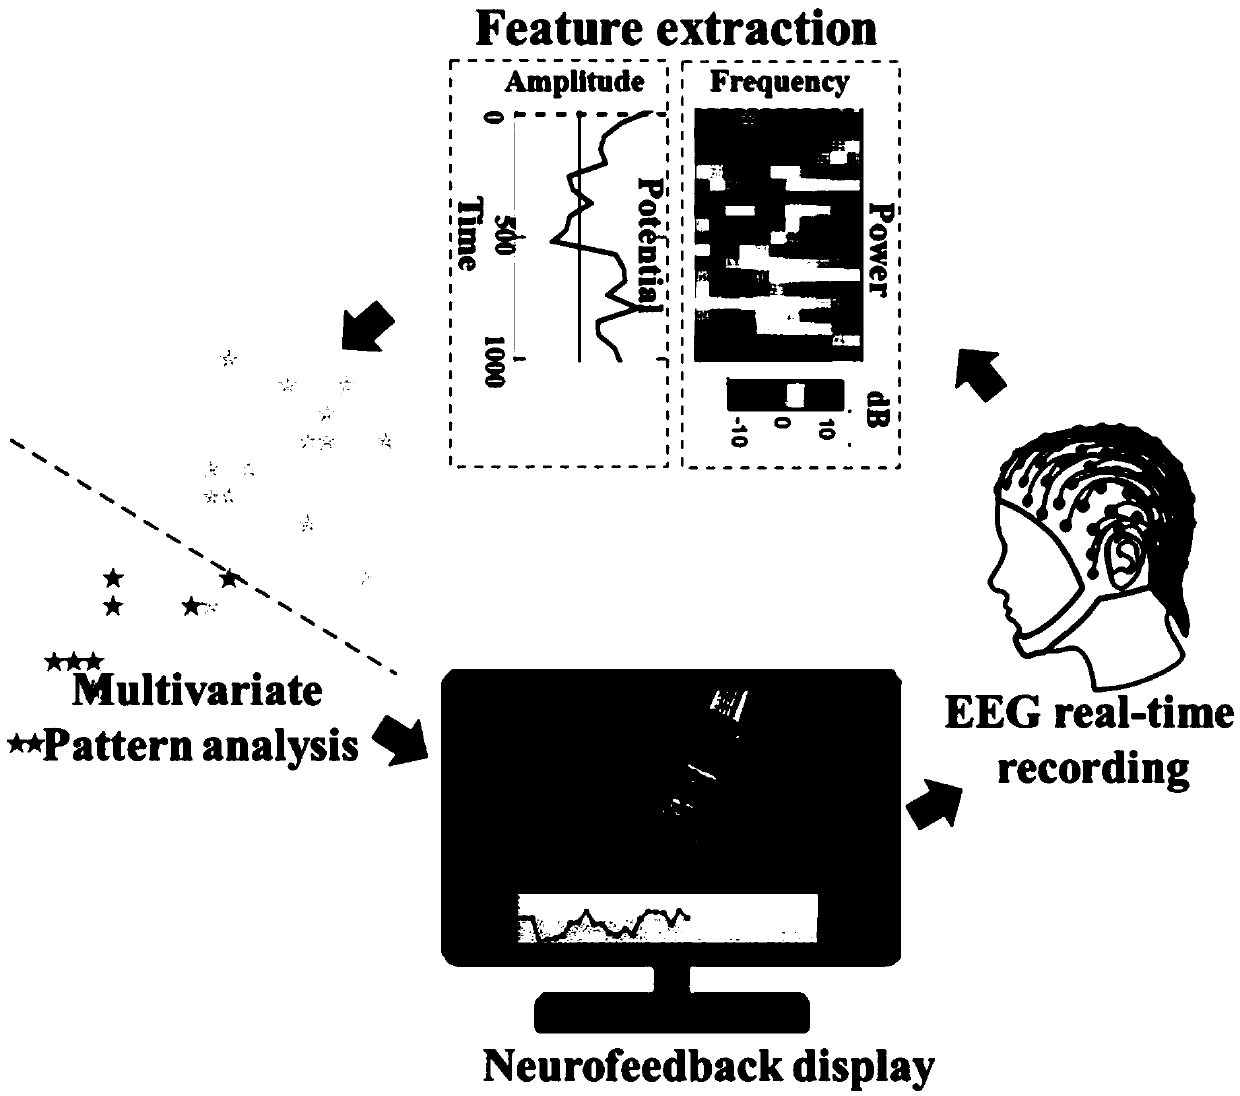 Smoking-desire-reducing neural signal feedback method based on electrical activity of brain